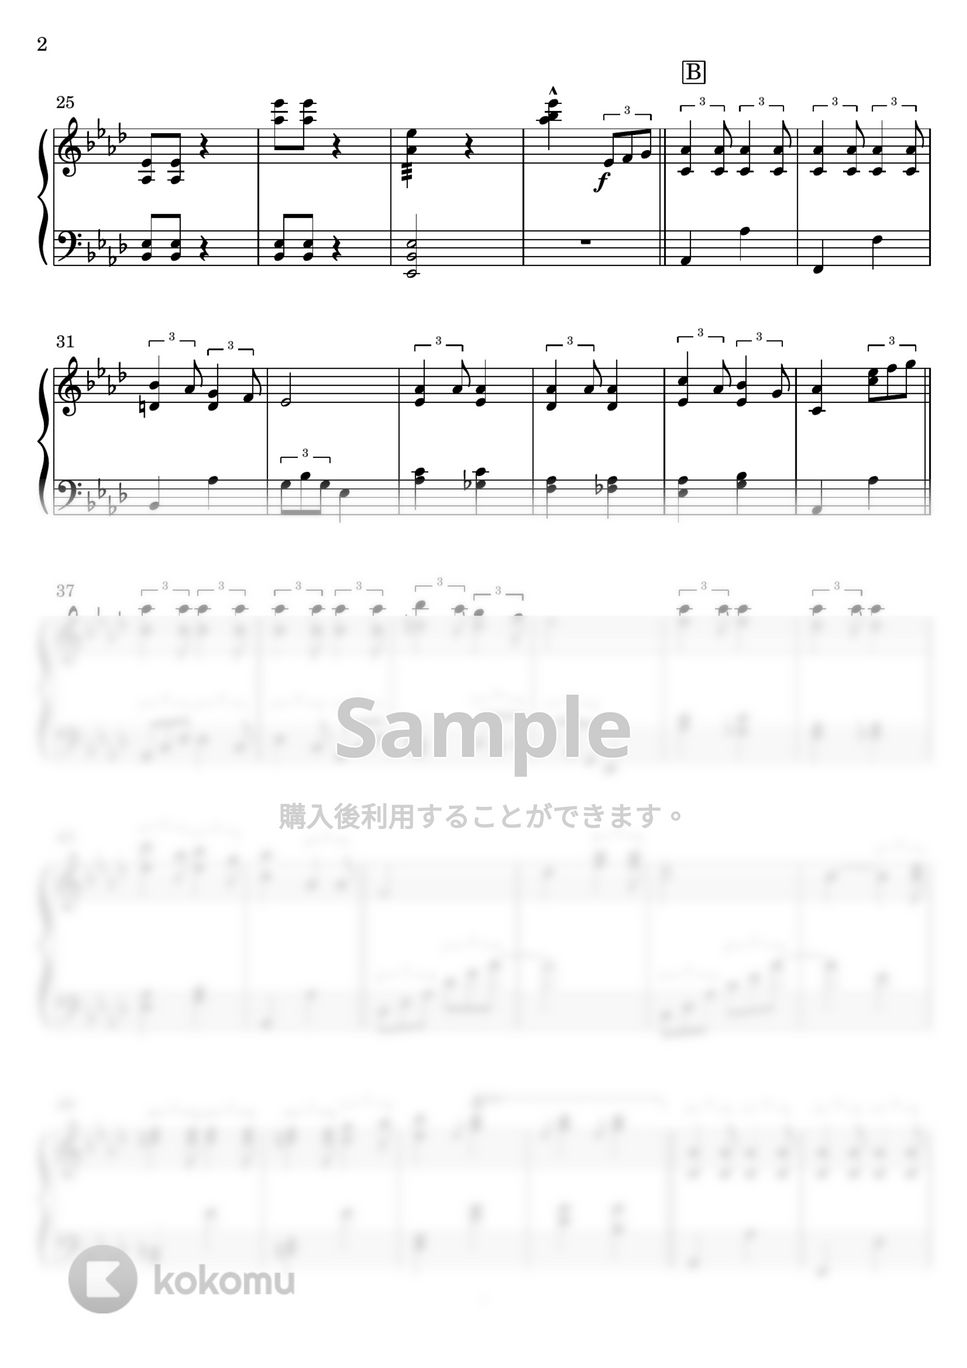 Mickey Mouse Club March/ミッキーマウス・マーチ (ピアノソロ) by Miz